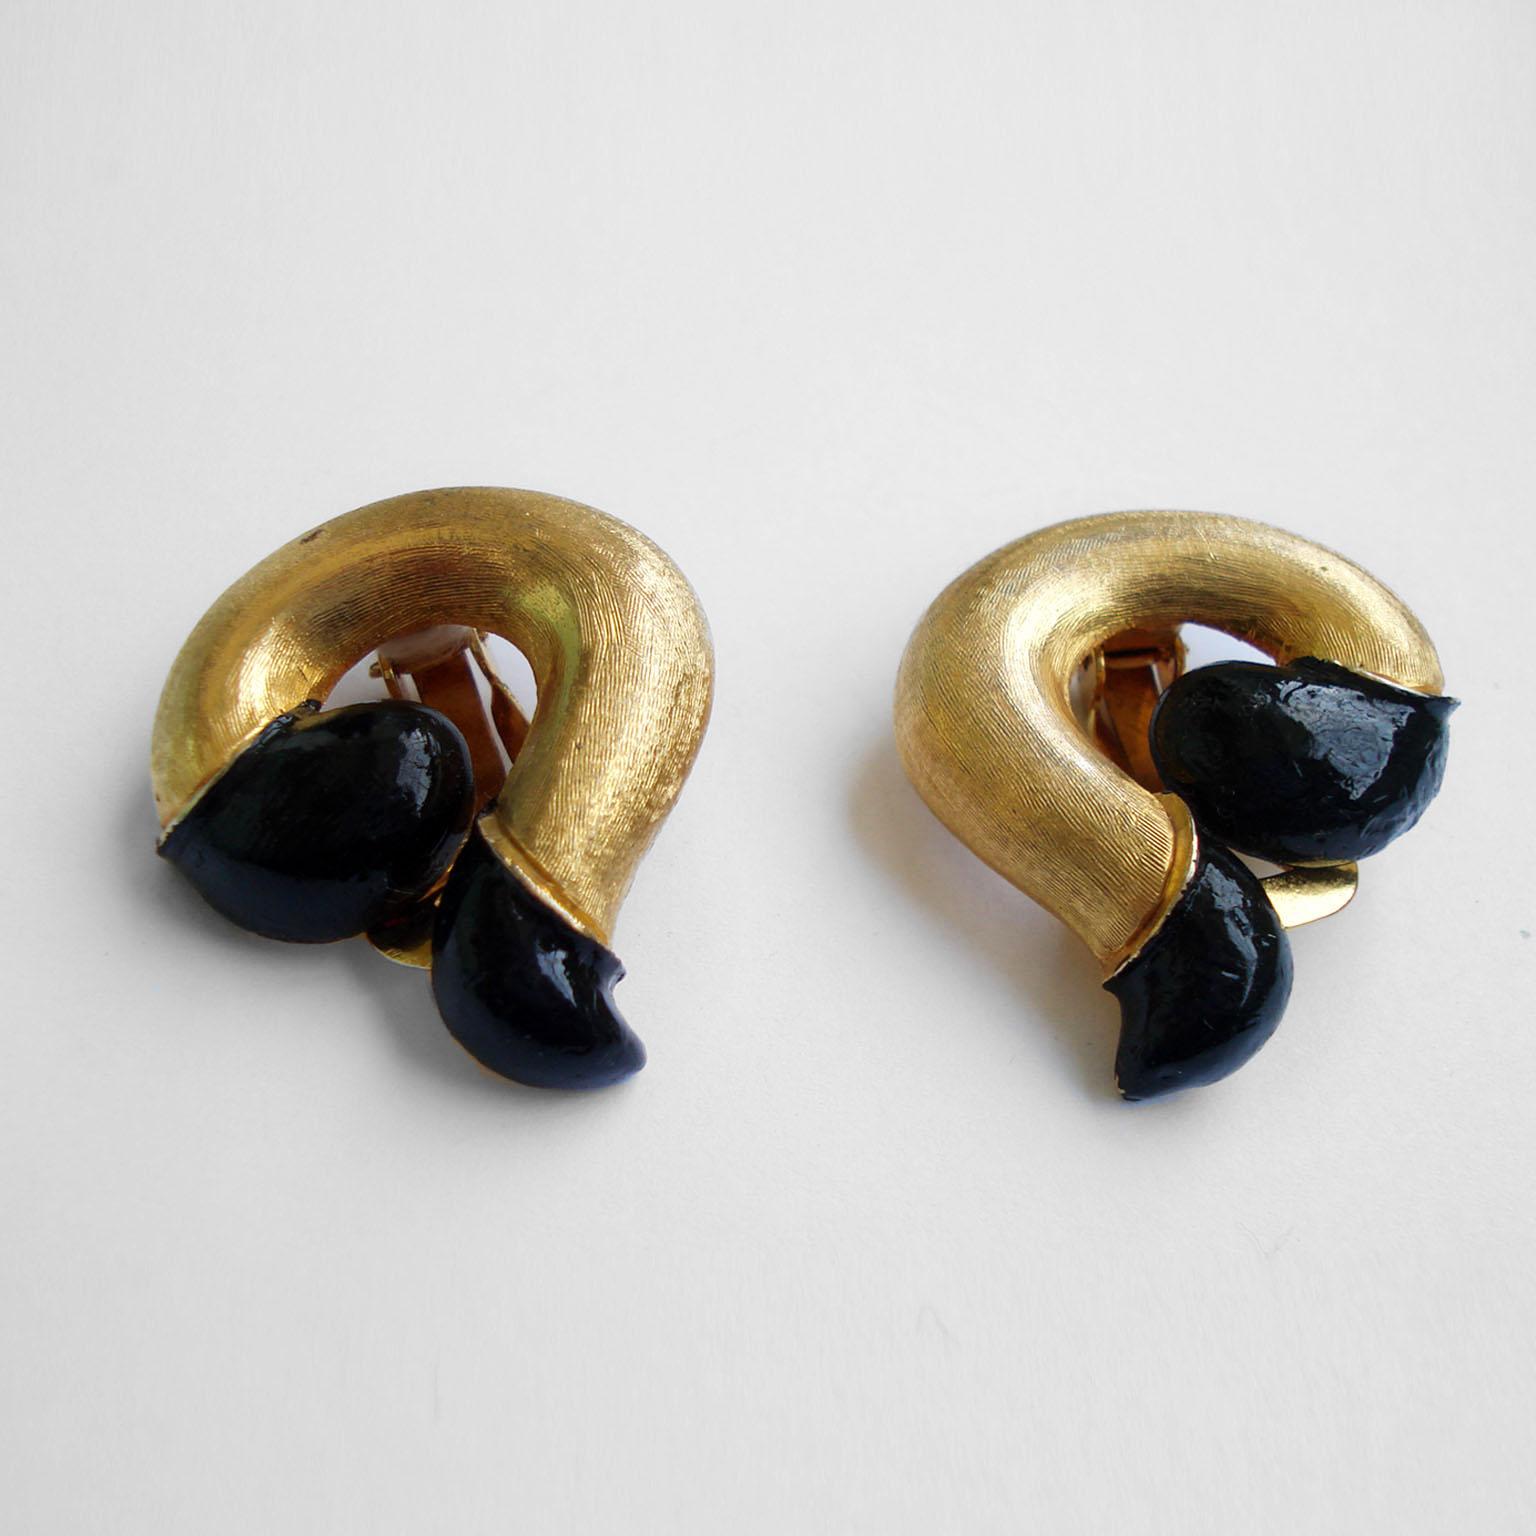 pierre cardin designer collection earrings